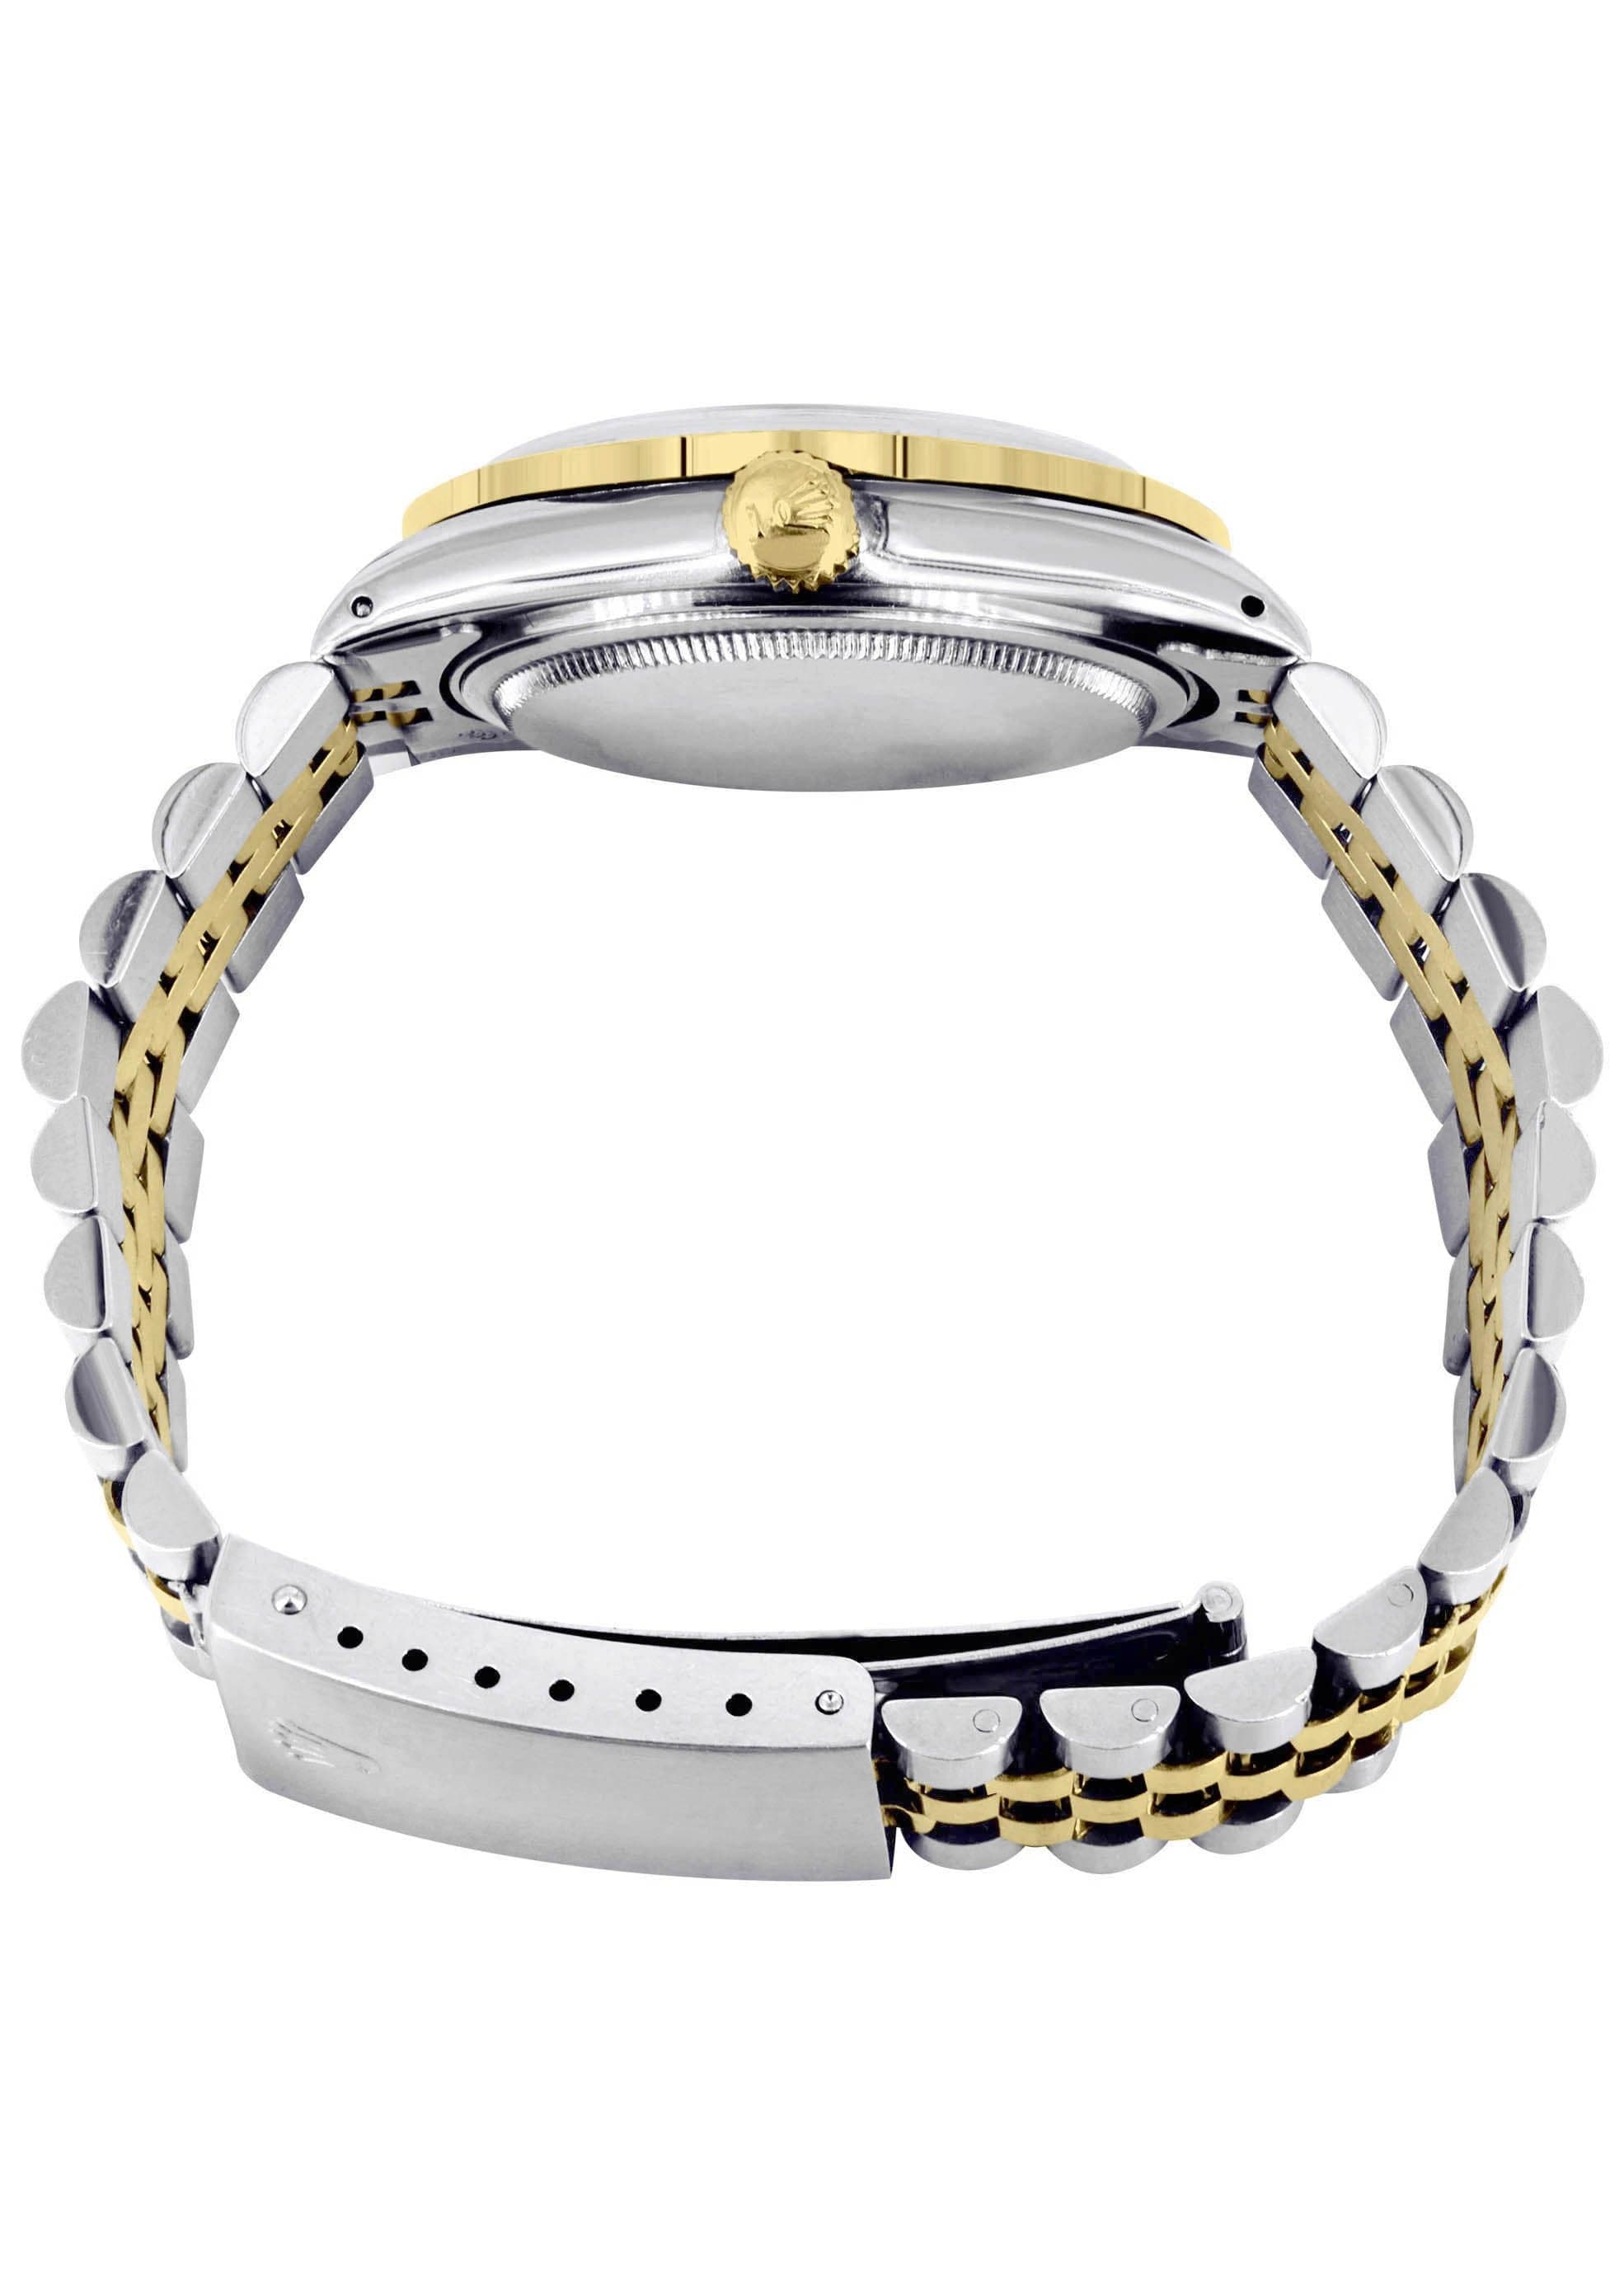 Diamond Gold Rolex Watch For Women 16233 | 36Mm | Custom Red Arabic Full Diamond Dial | Two Row 4.25 Carat Bezel | Jubilee Band